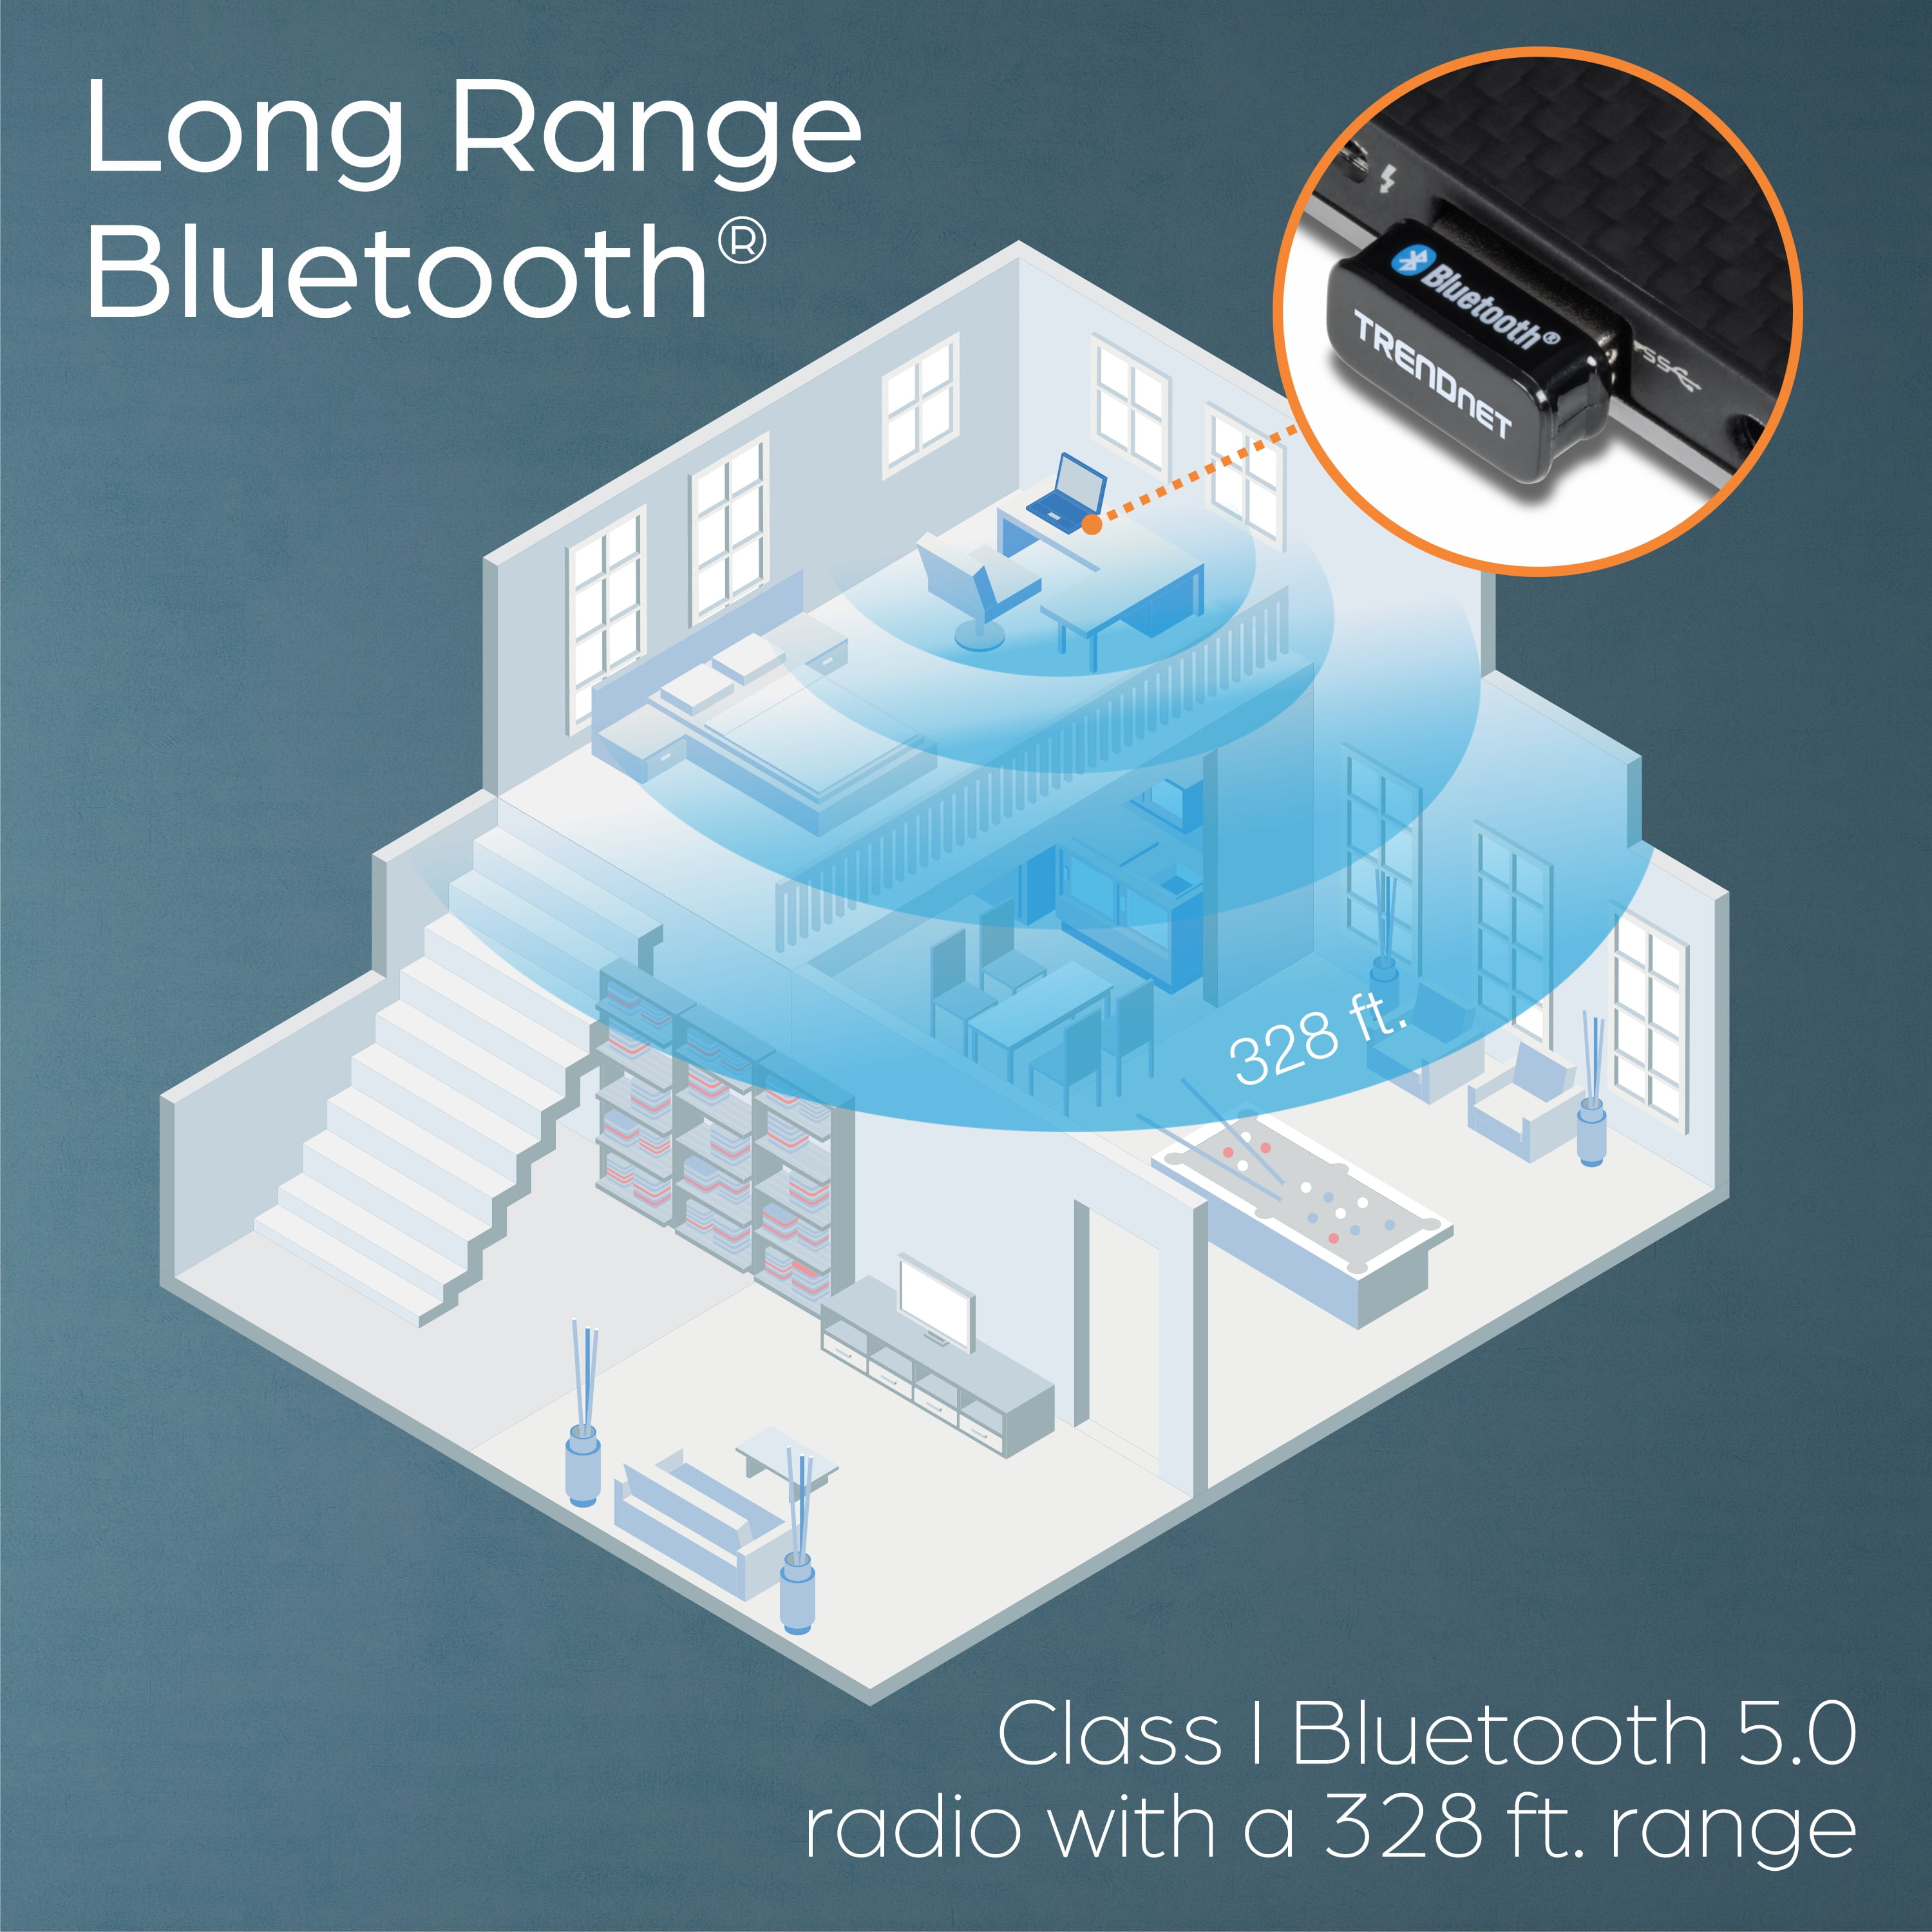 Dongle USB bluetooth TBW-110UB, Dongles Bluetooth